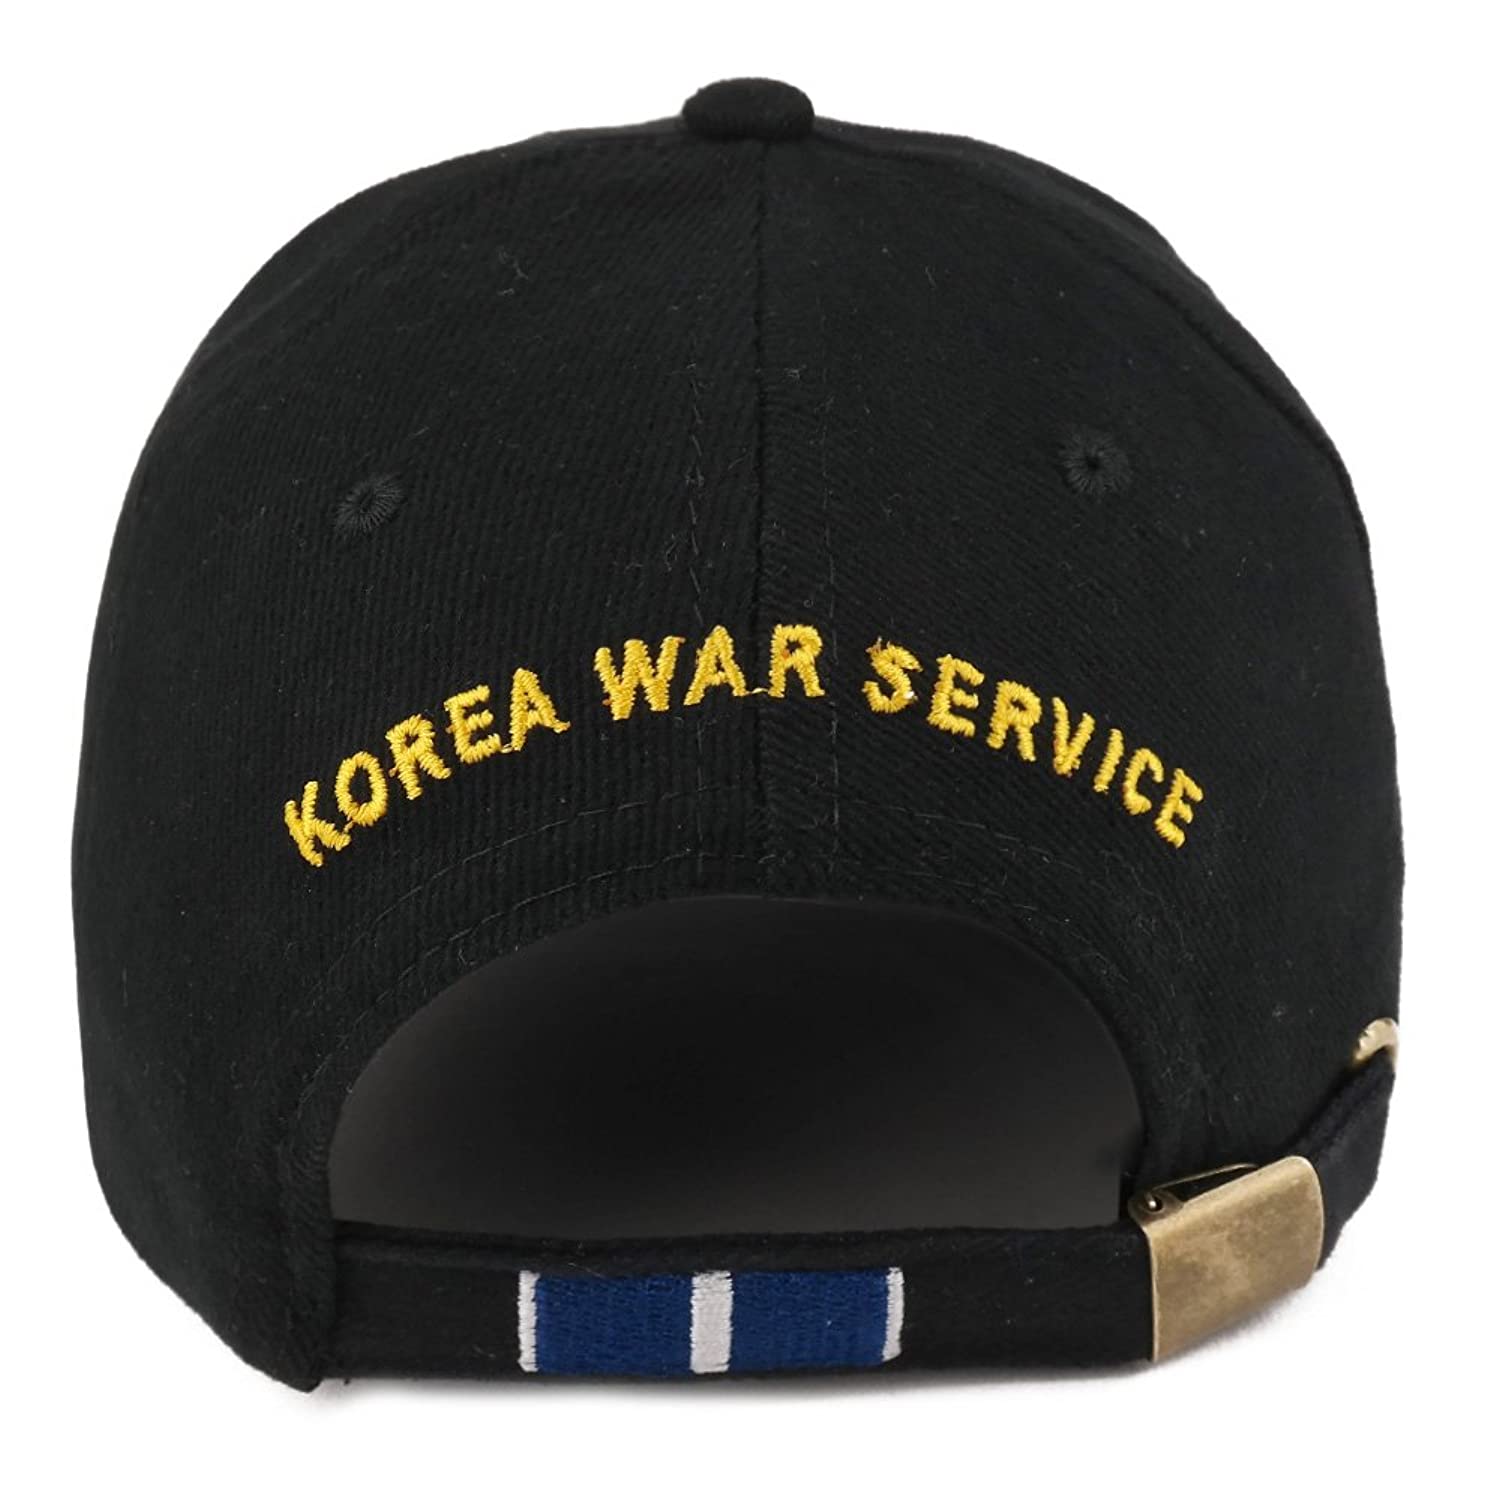 Armycrew Korea War Veteran CIB Embroidered Structured Military Baseball Cap